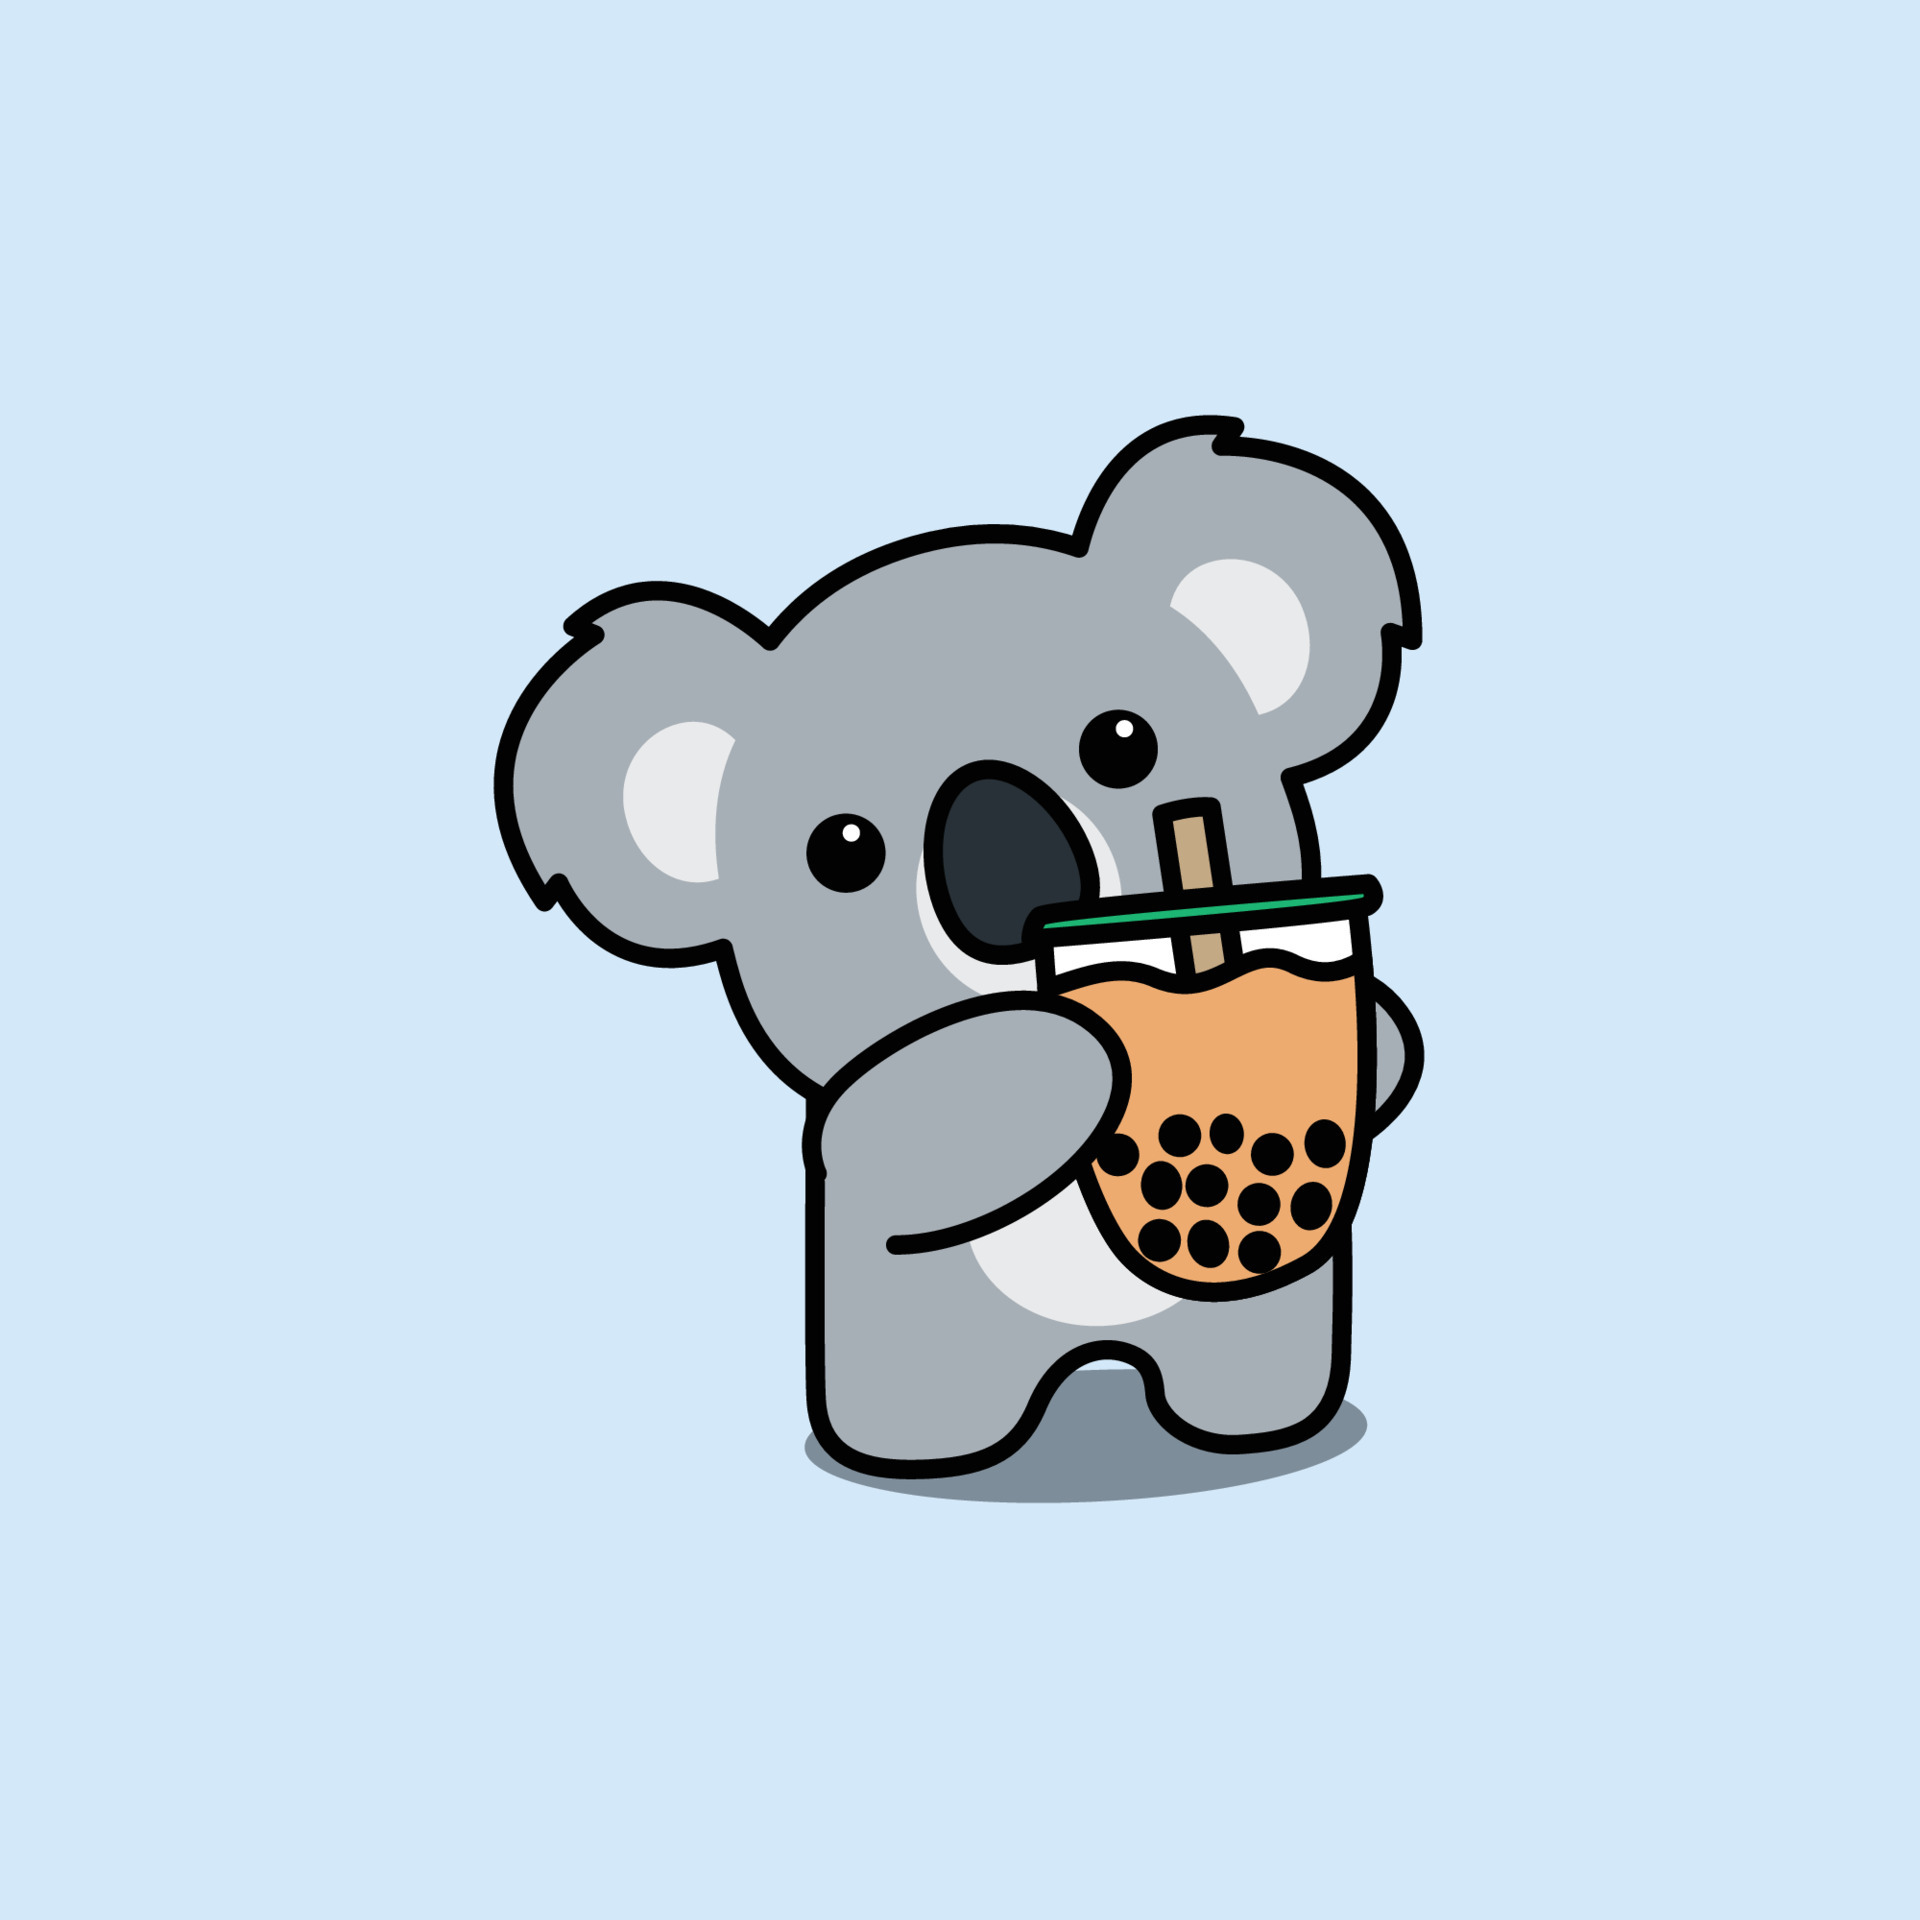 https://static.vecteezy.com/system/resources/previews/006/936/458/original/cute-koala-with-bubble-tea-cartoon-illustration-vector.jpg